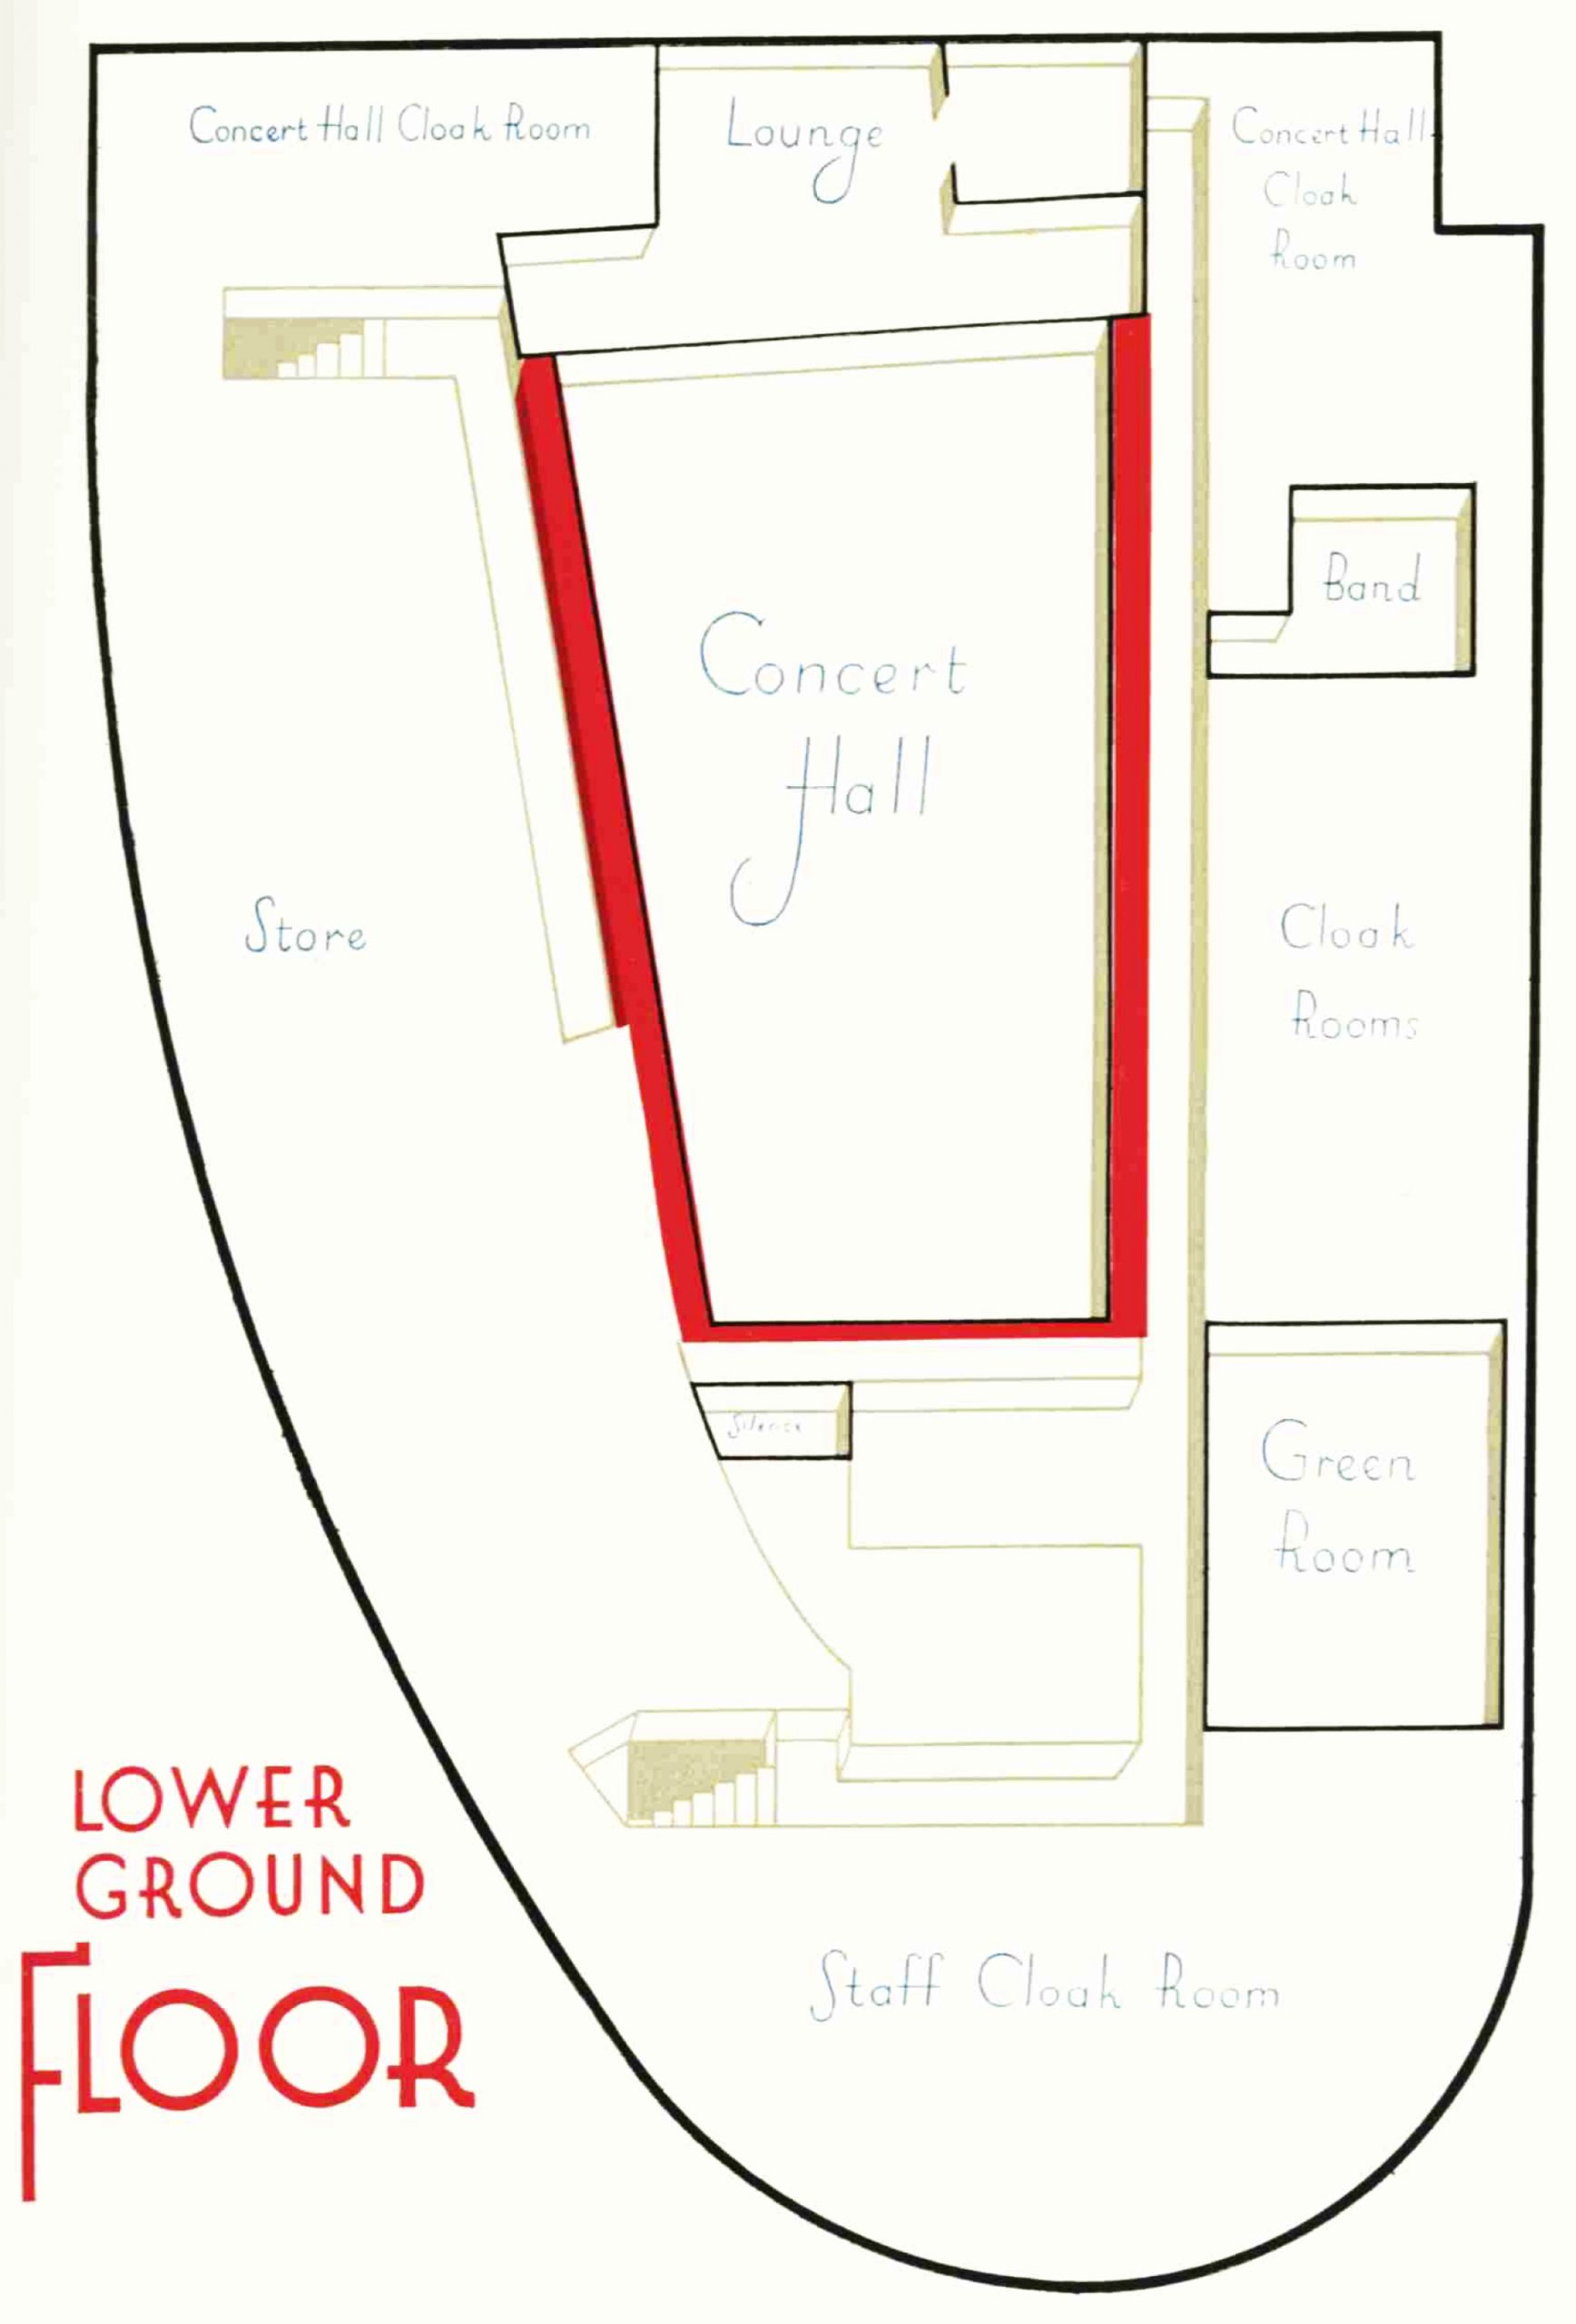 Diagram of the lower ground floor